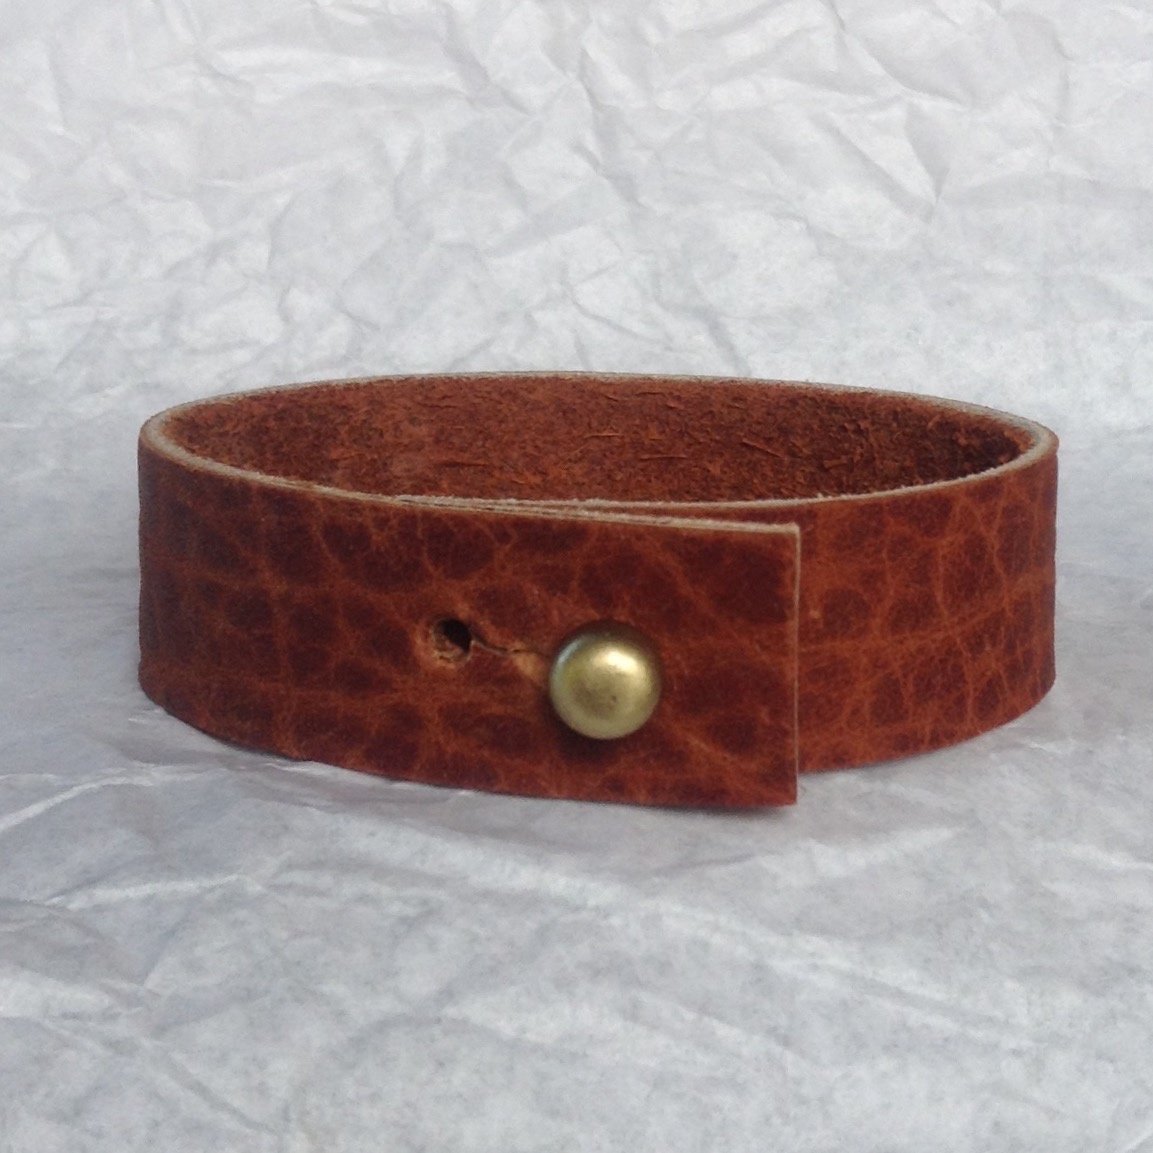 Basic natural textured leather strap bracelet.